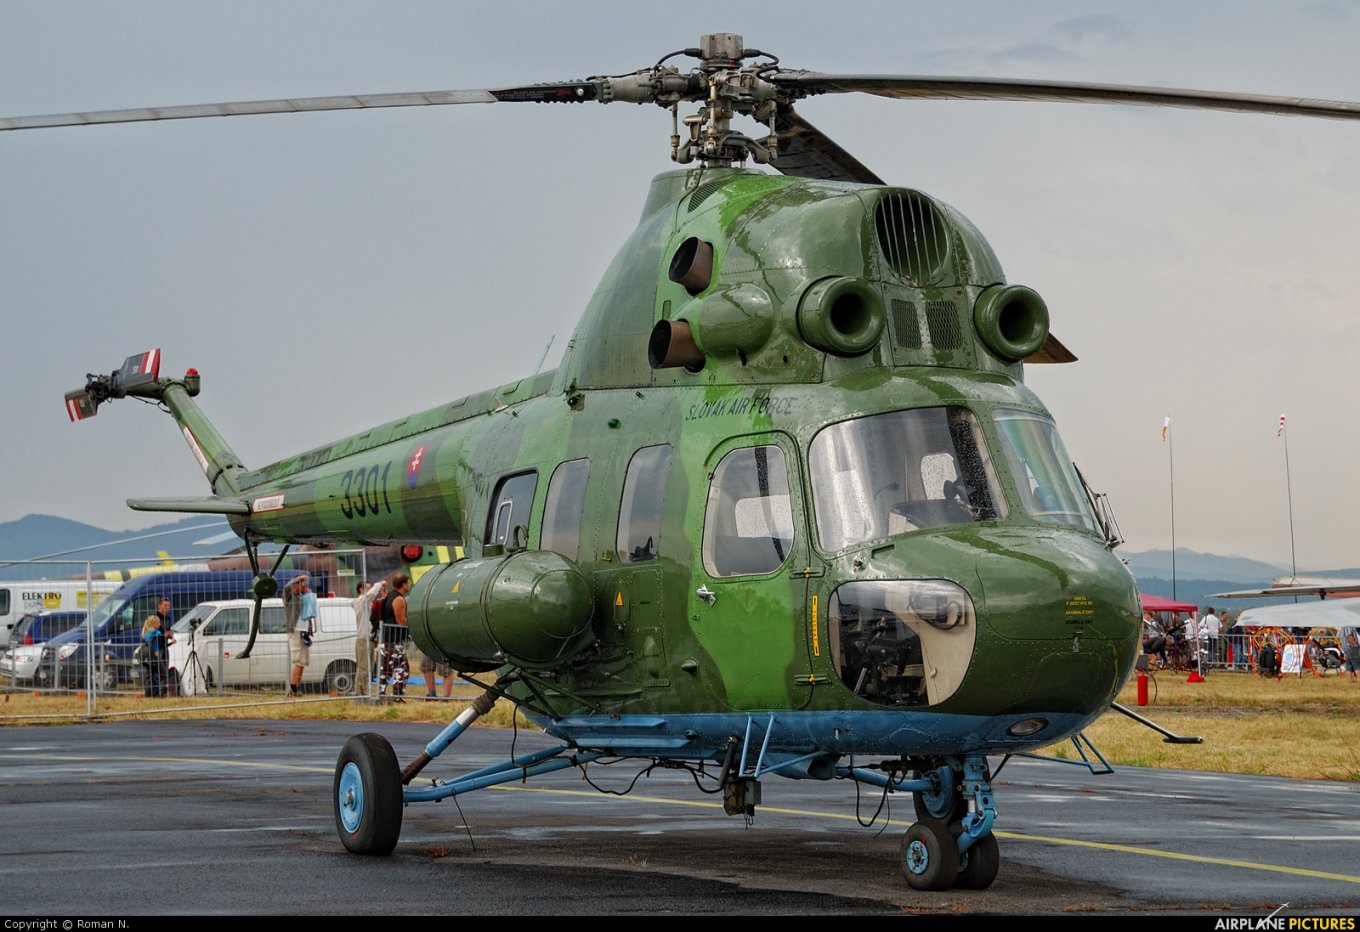 Slovakia Delivered Mi-17s For the Armed Forces of Ukraine (Video), Defense Express, war in Ukraine, Russian-Ukrainian war